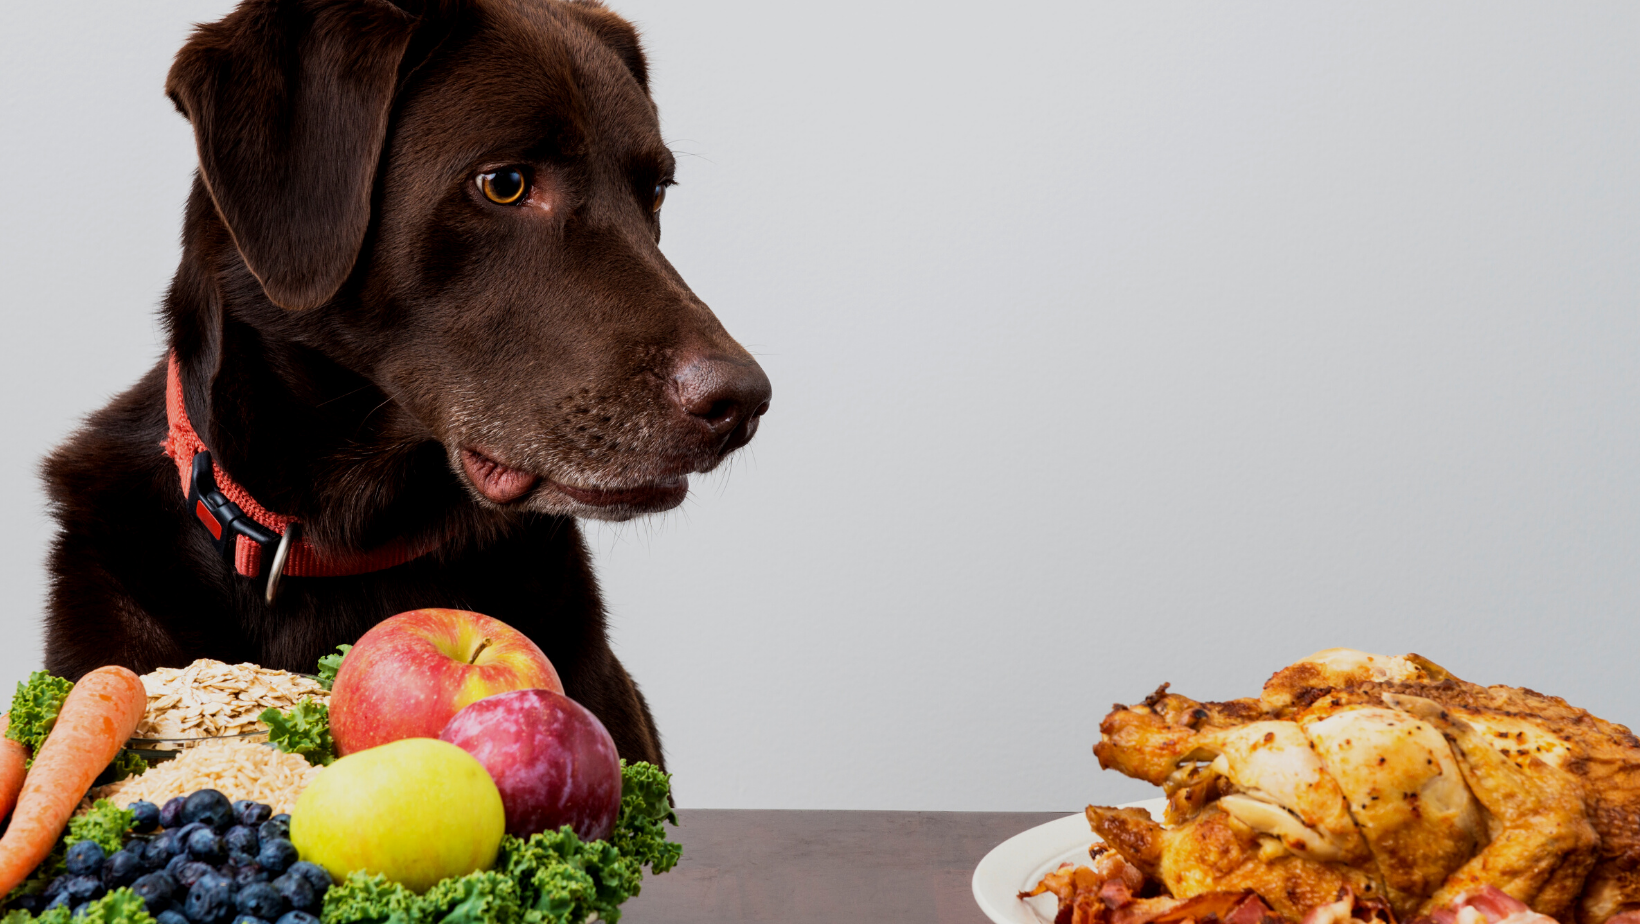 Sudden change in your dog's diet